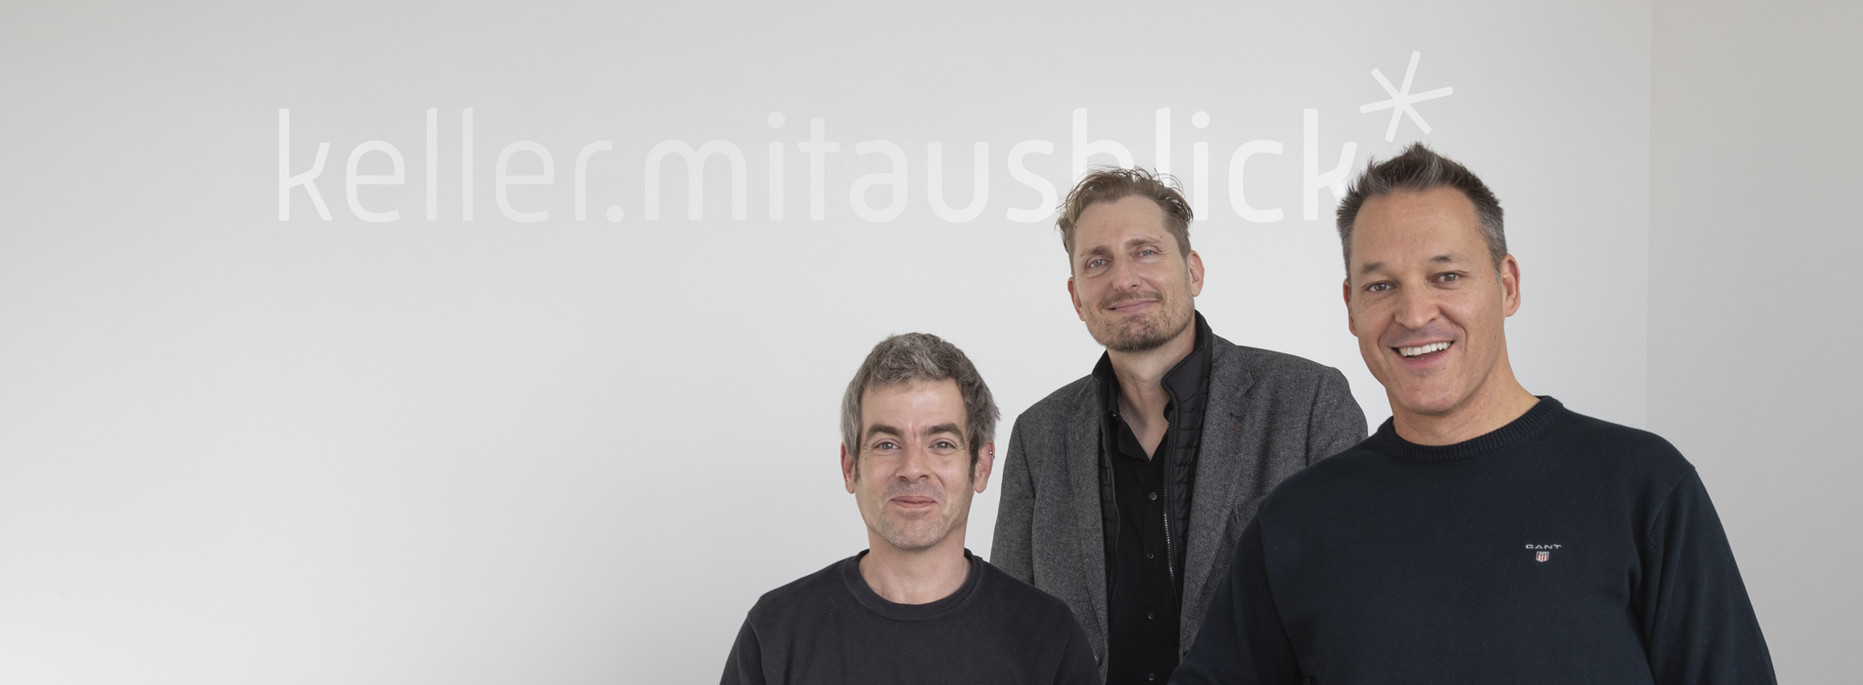 Von links: Michael Zeindl, Jörg Petermann, Michael Keller